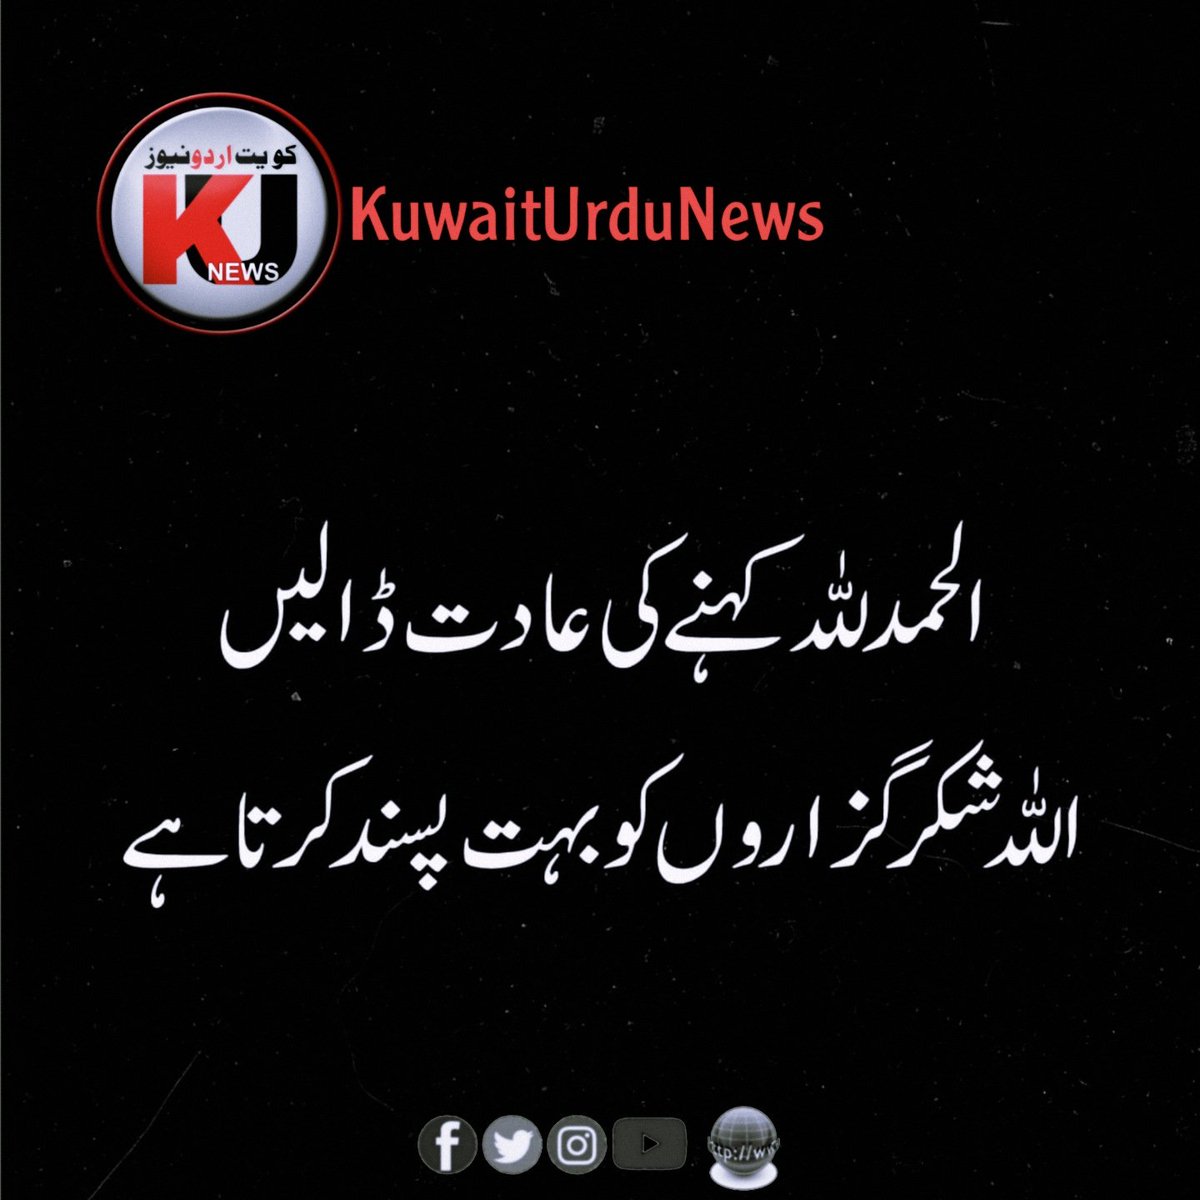 #kuwait #KuwaitUrdu #kuwaiturdunews #urduquotes #islamicquotes